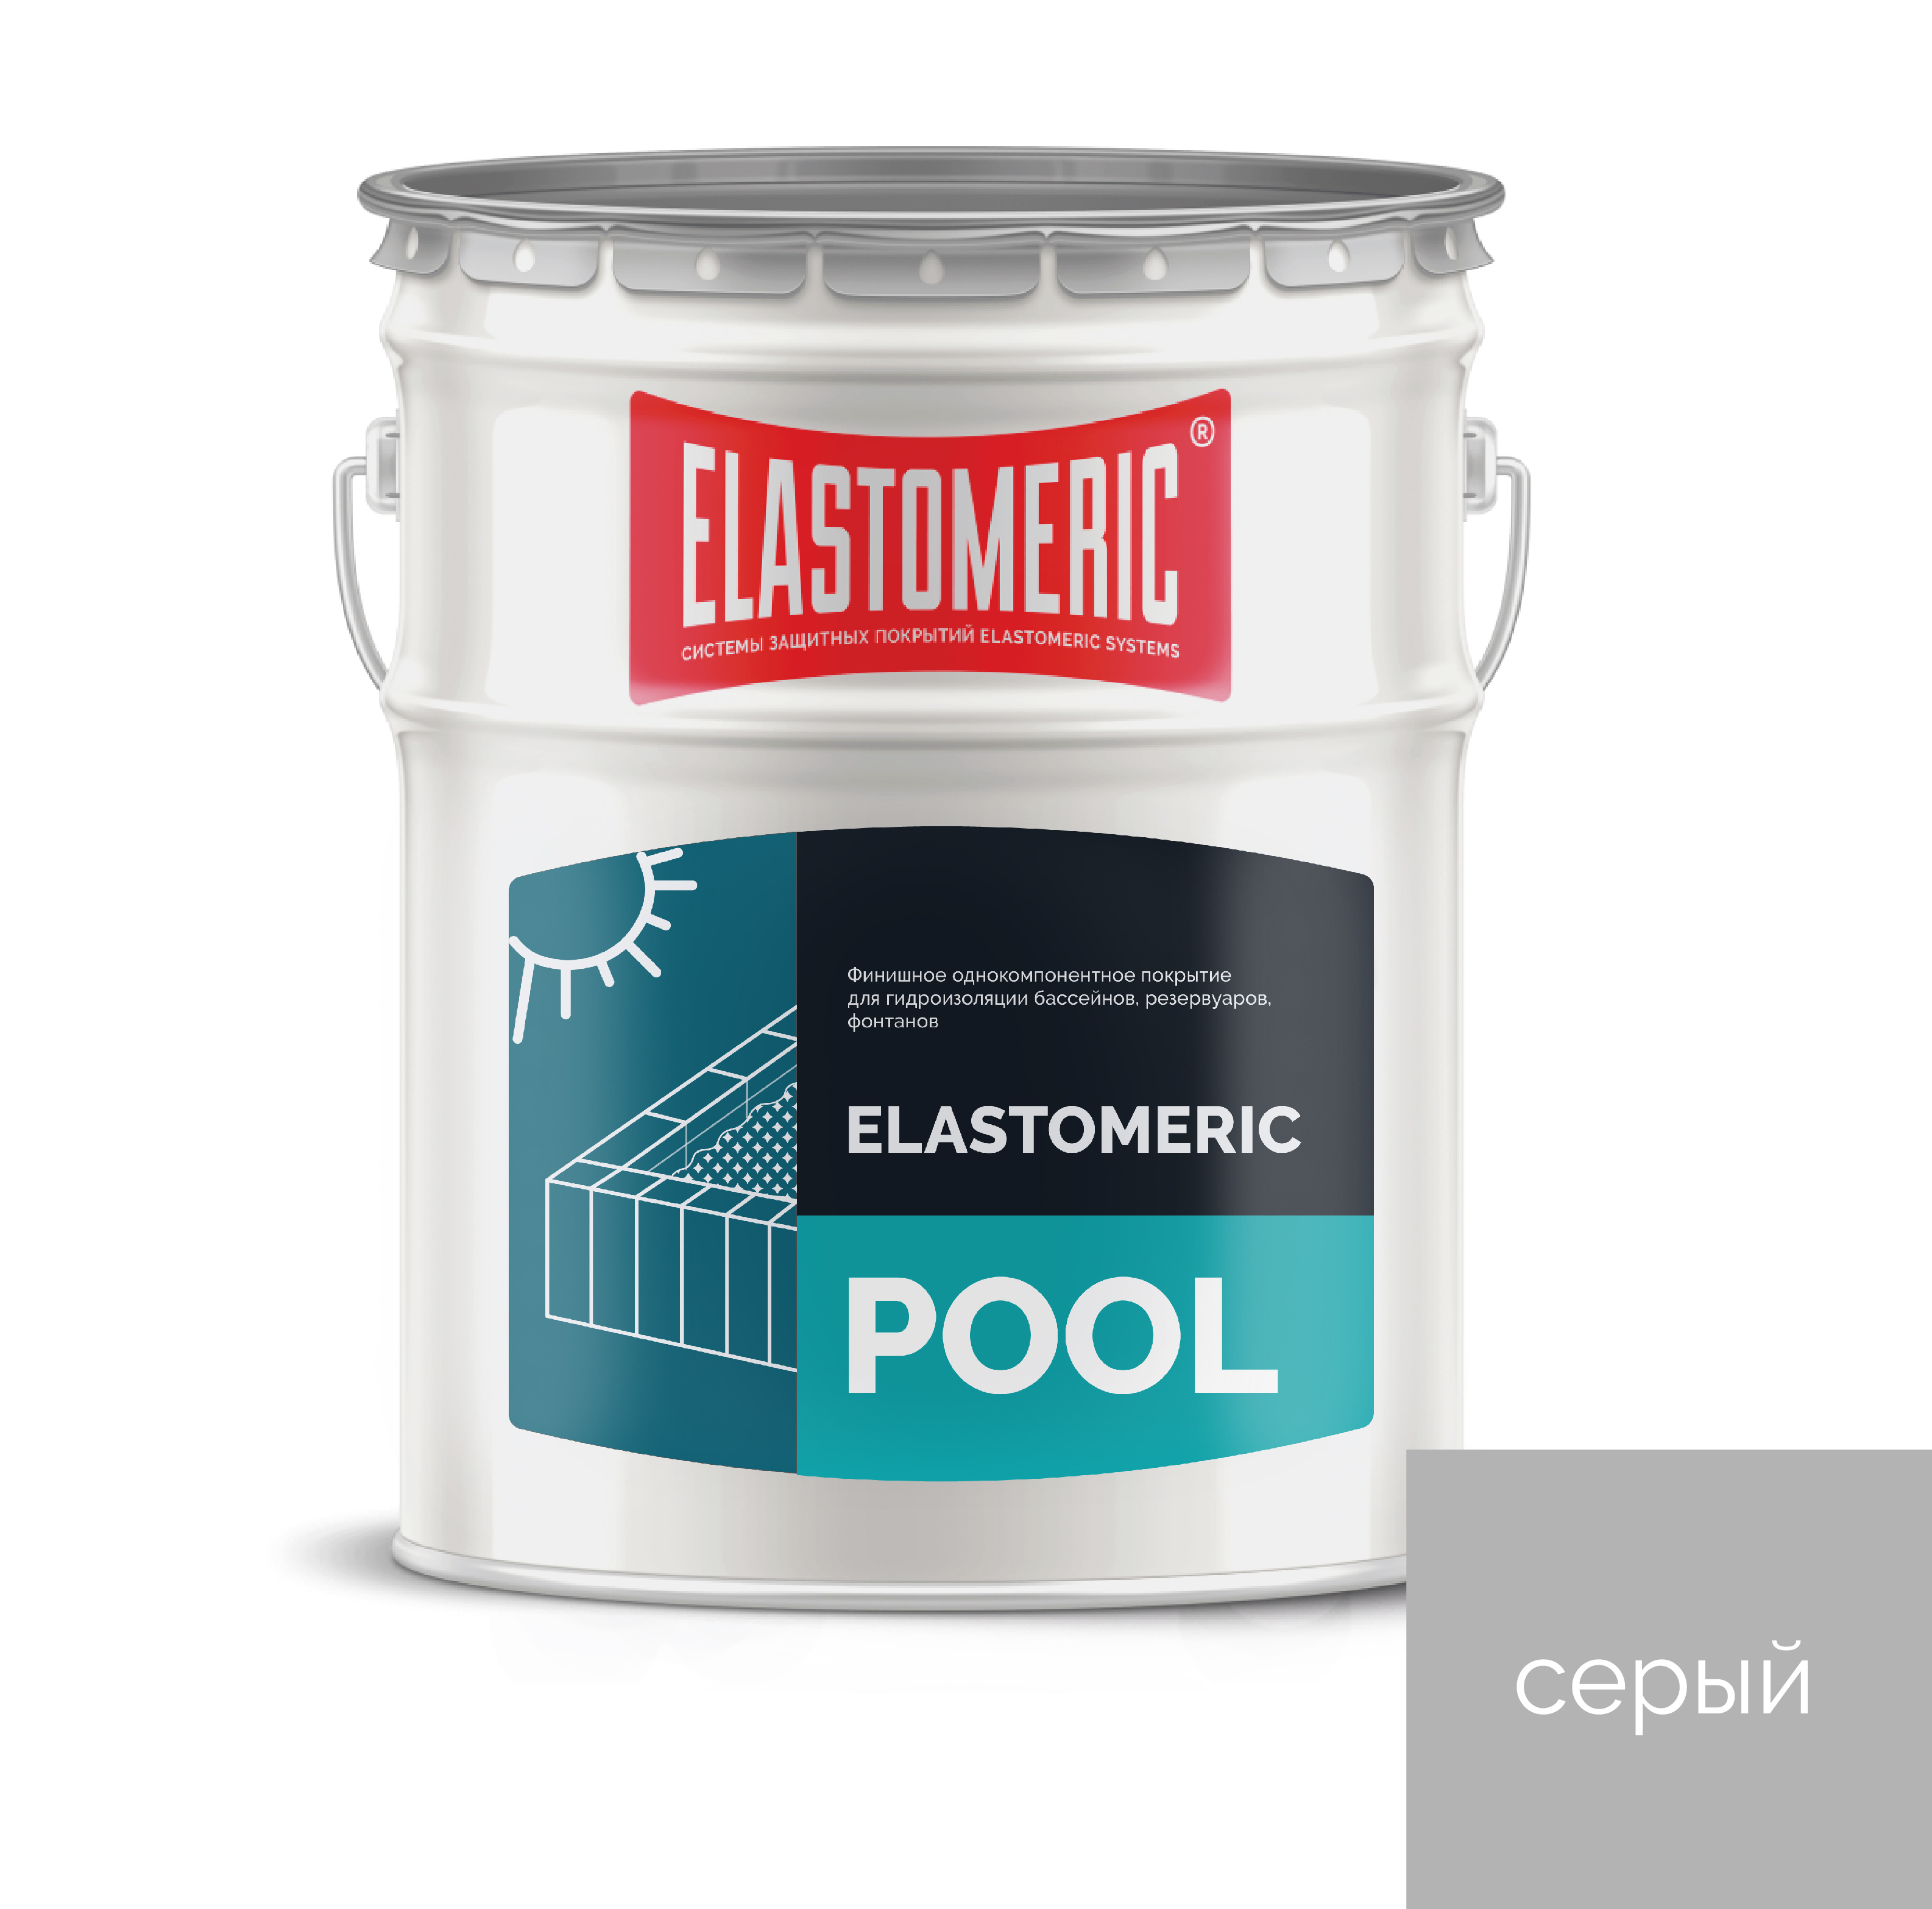 фото Гидроизоляция для бассейна elastomeric pool 20кг., серый elastomeric systems